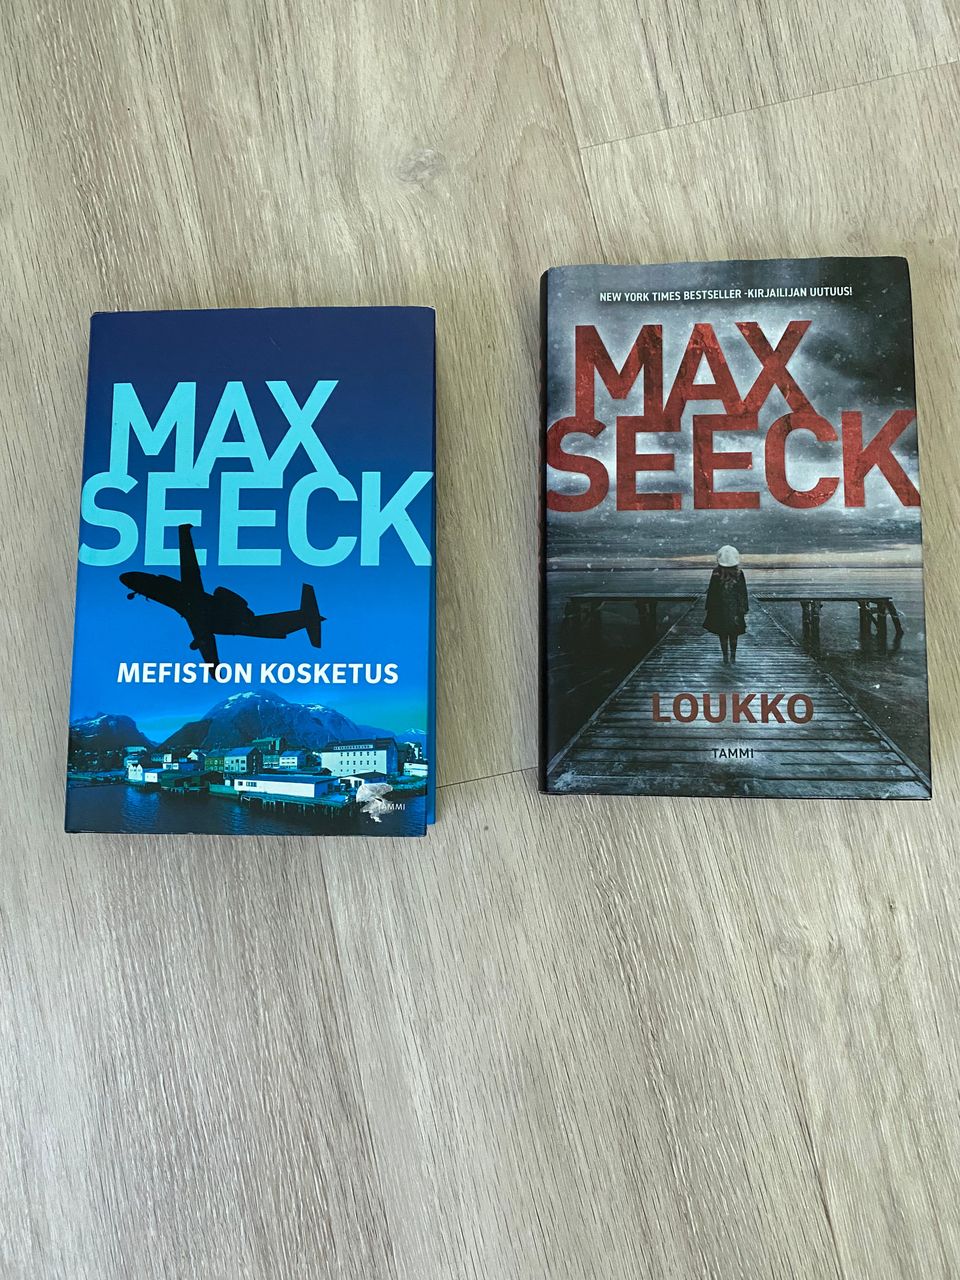 Max Seeck:Mefiston kosketus ja Loukko